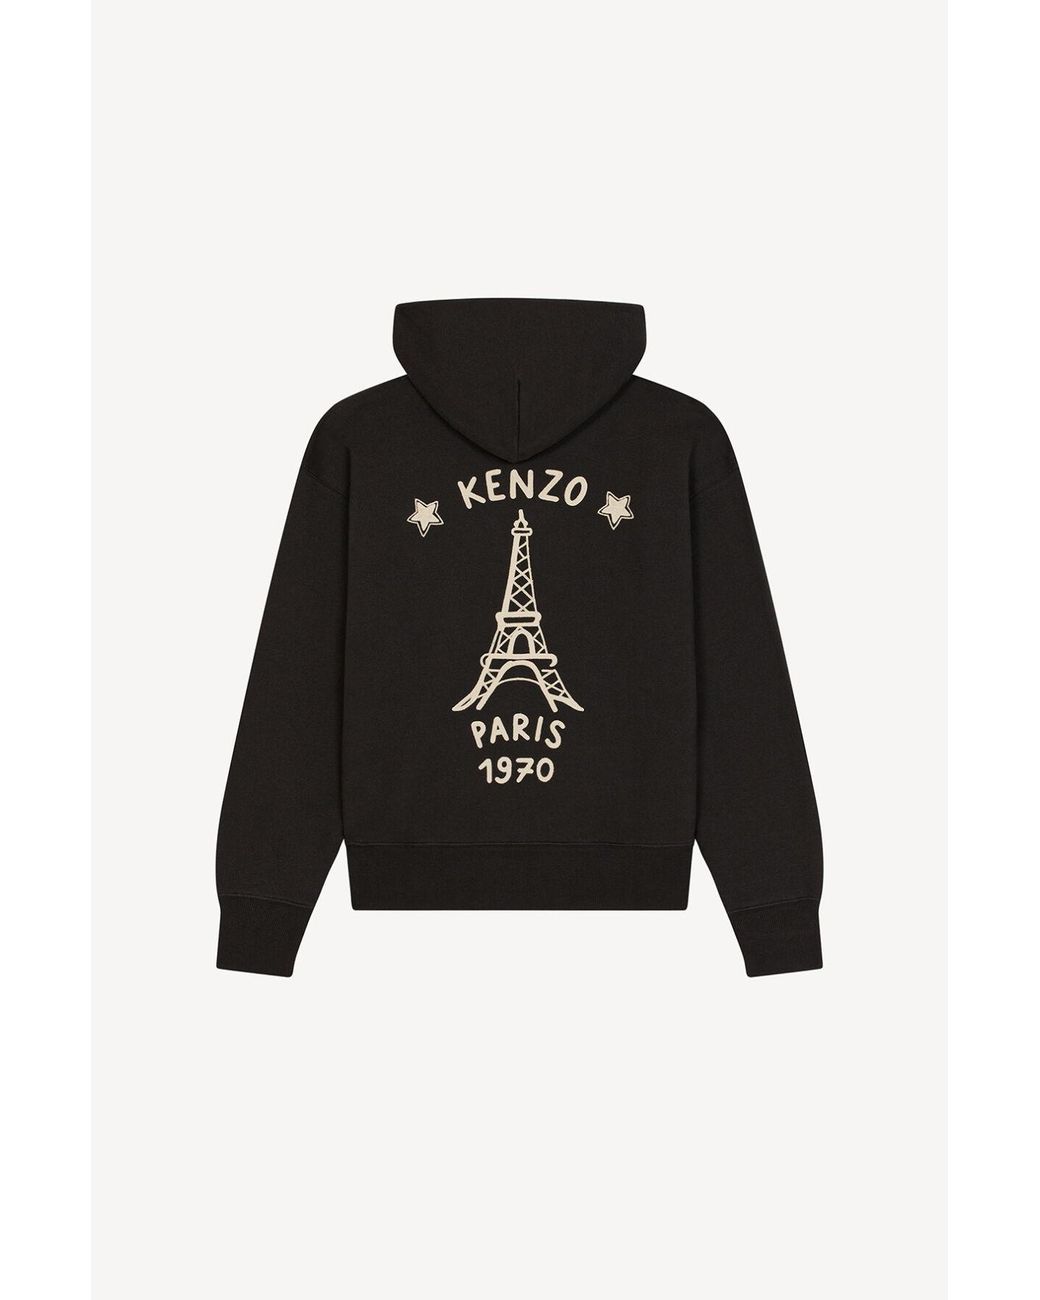 KENZO 'souvenir' Oversized Hooded Sweatshirt in Black for Men | Lyst